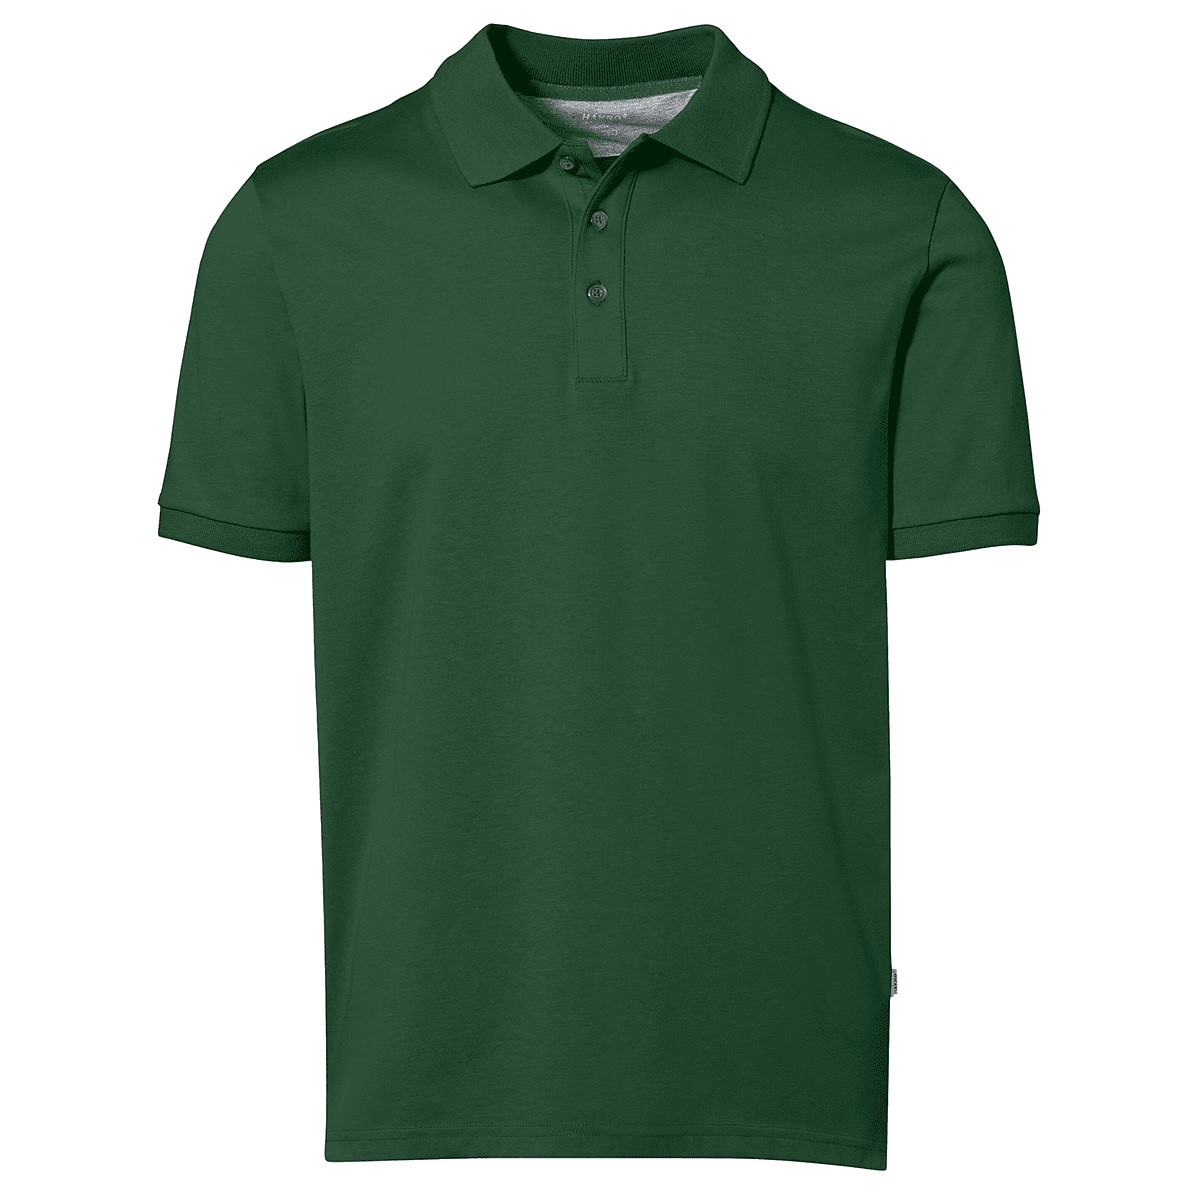 Herren Polo-Shirt Funktion grün